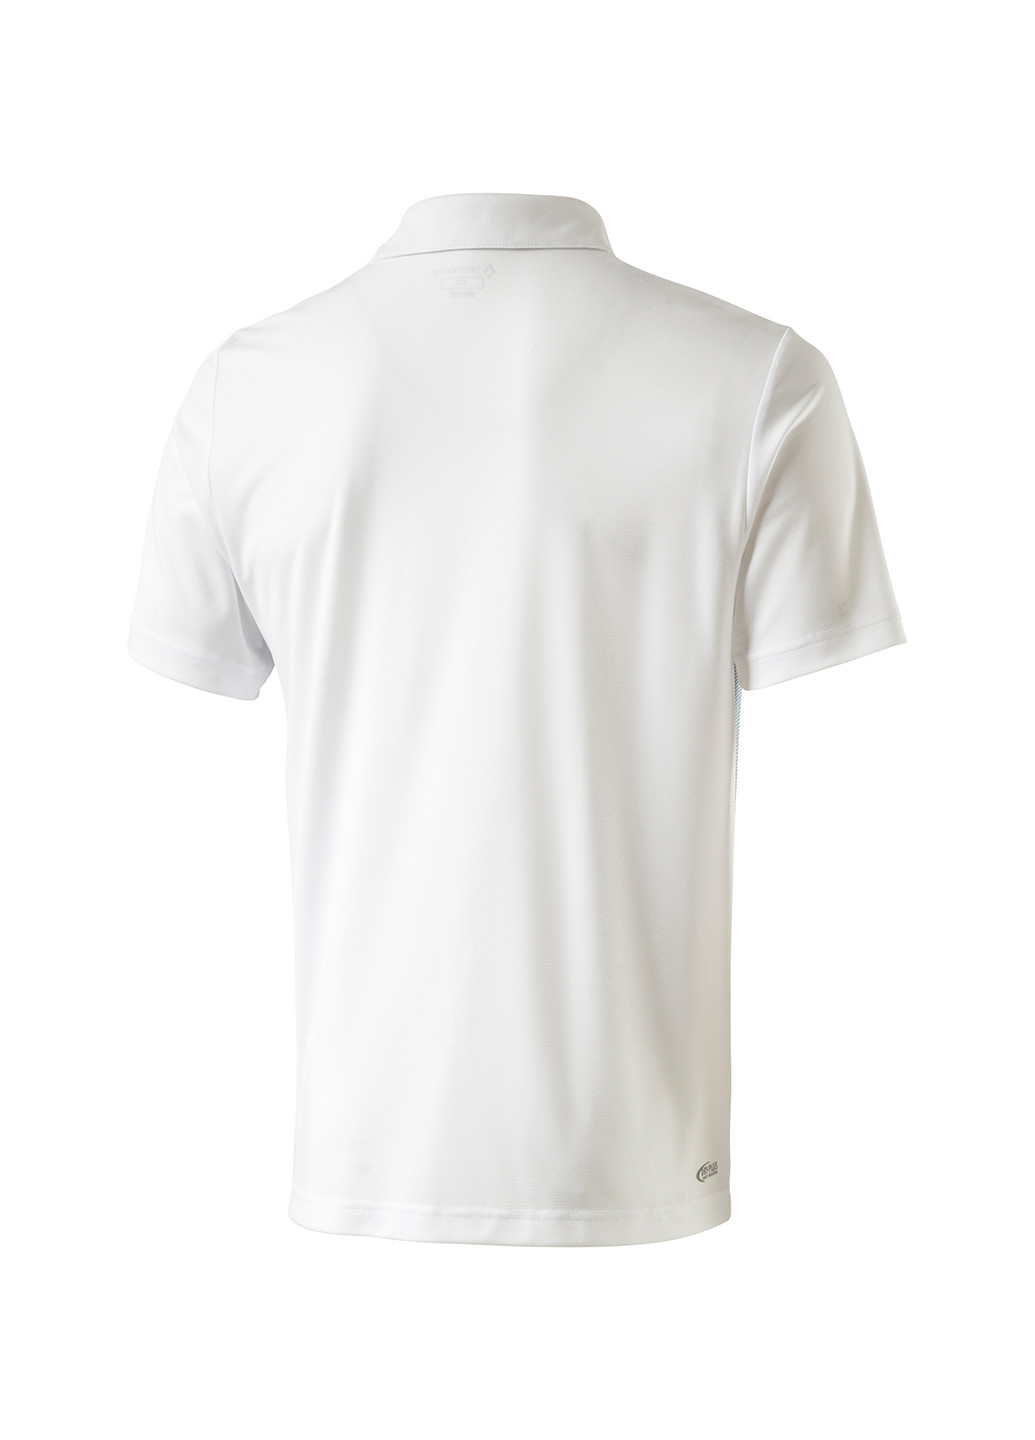 Цветная футболка-поло для мужчин TECNOPRO с логотипом